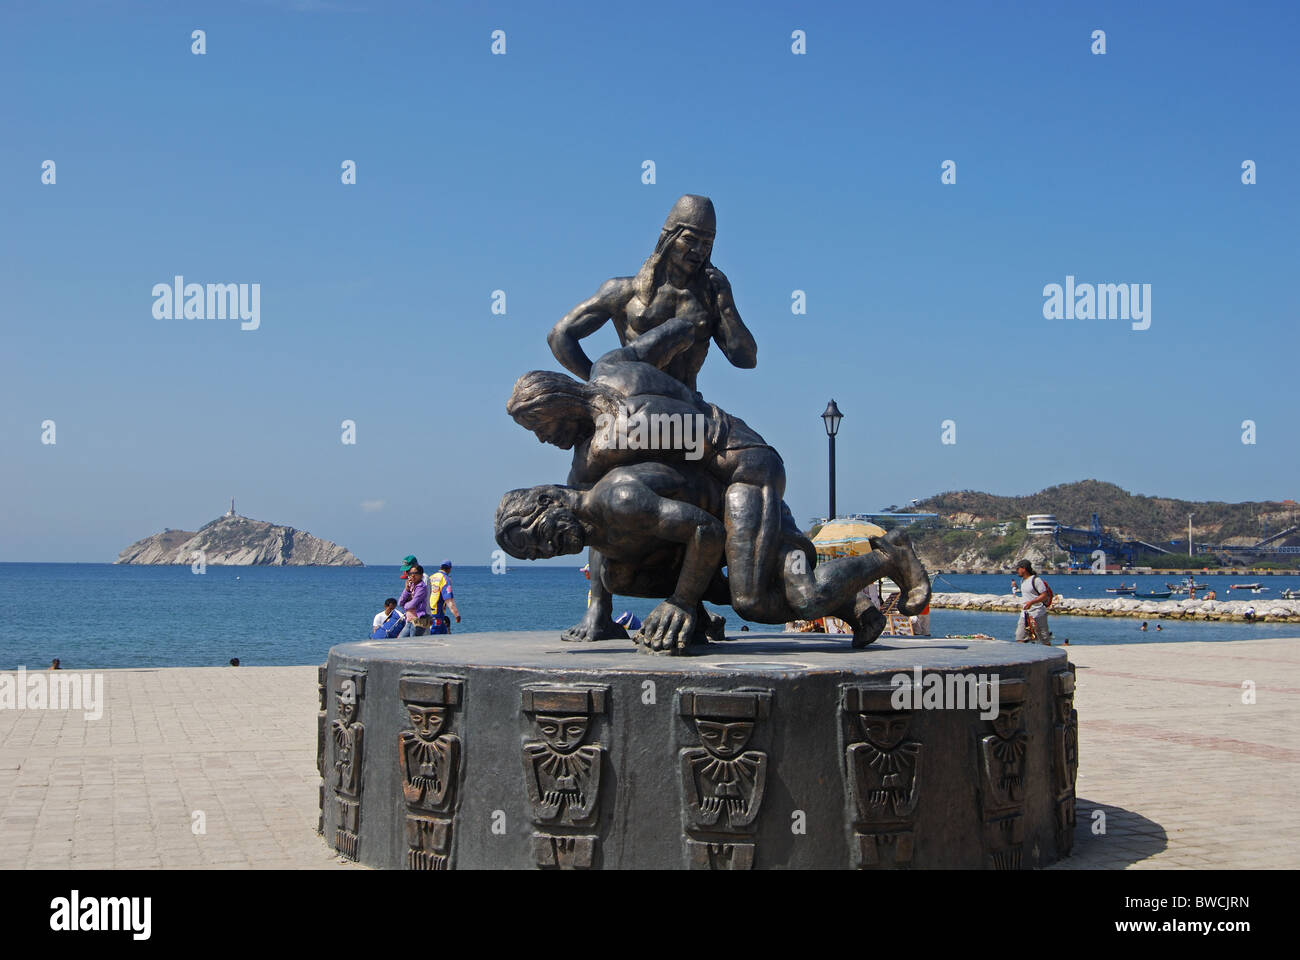 Statue of men wrestling, Promenade walk, Santa Marta, Columbia, South America. Stock Photo